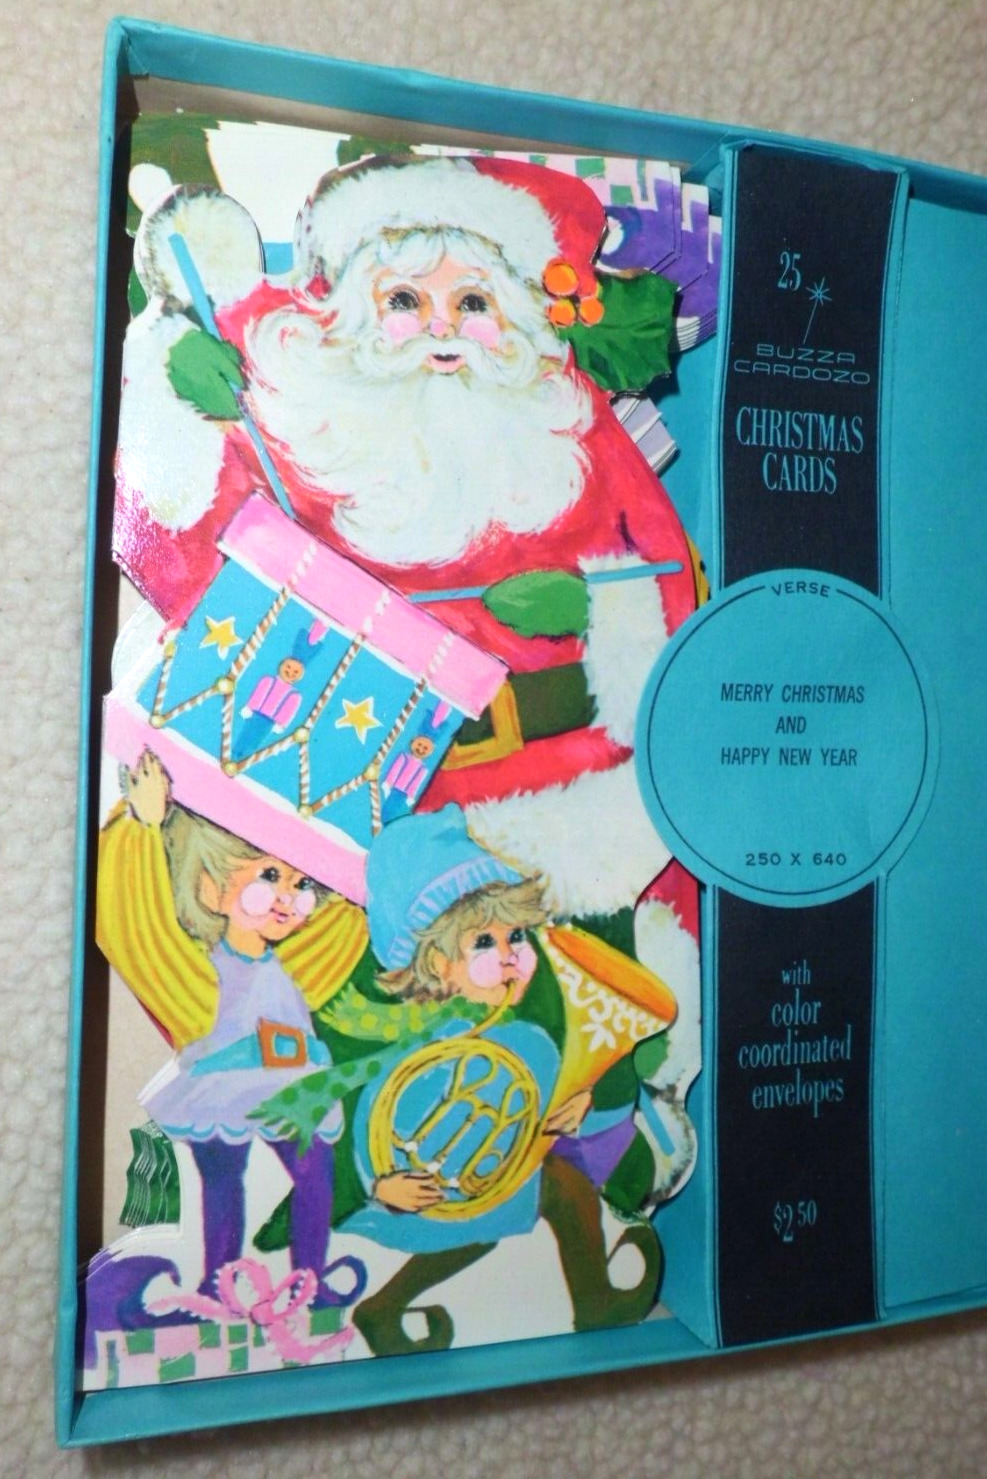 18 Vintage Christmas Cards Envelopes Buzza Cardozo Santa Claus 1960s